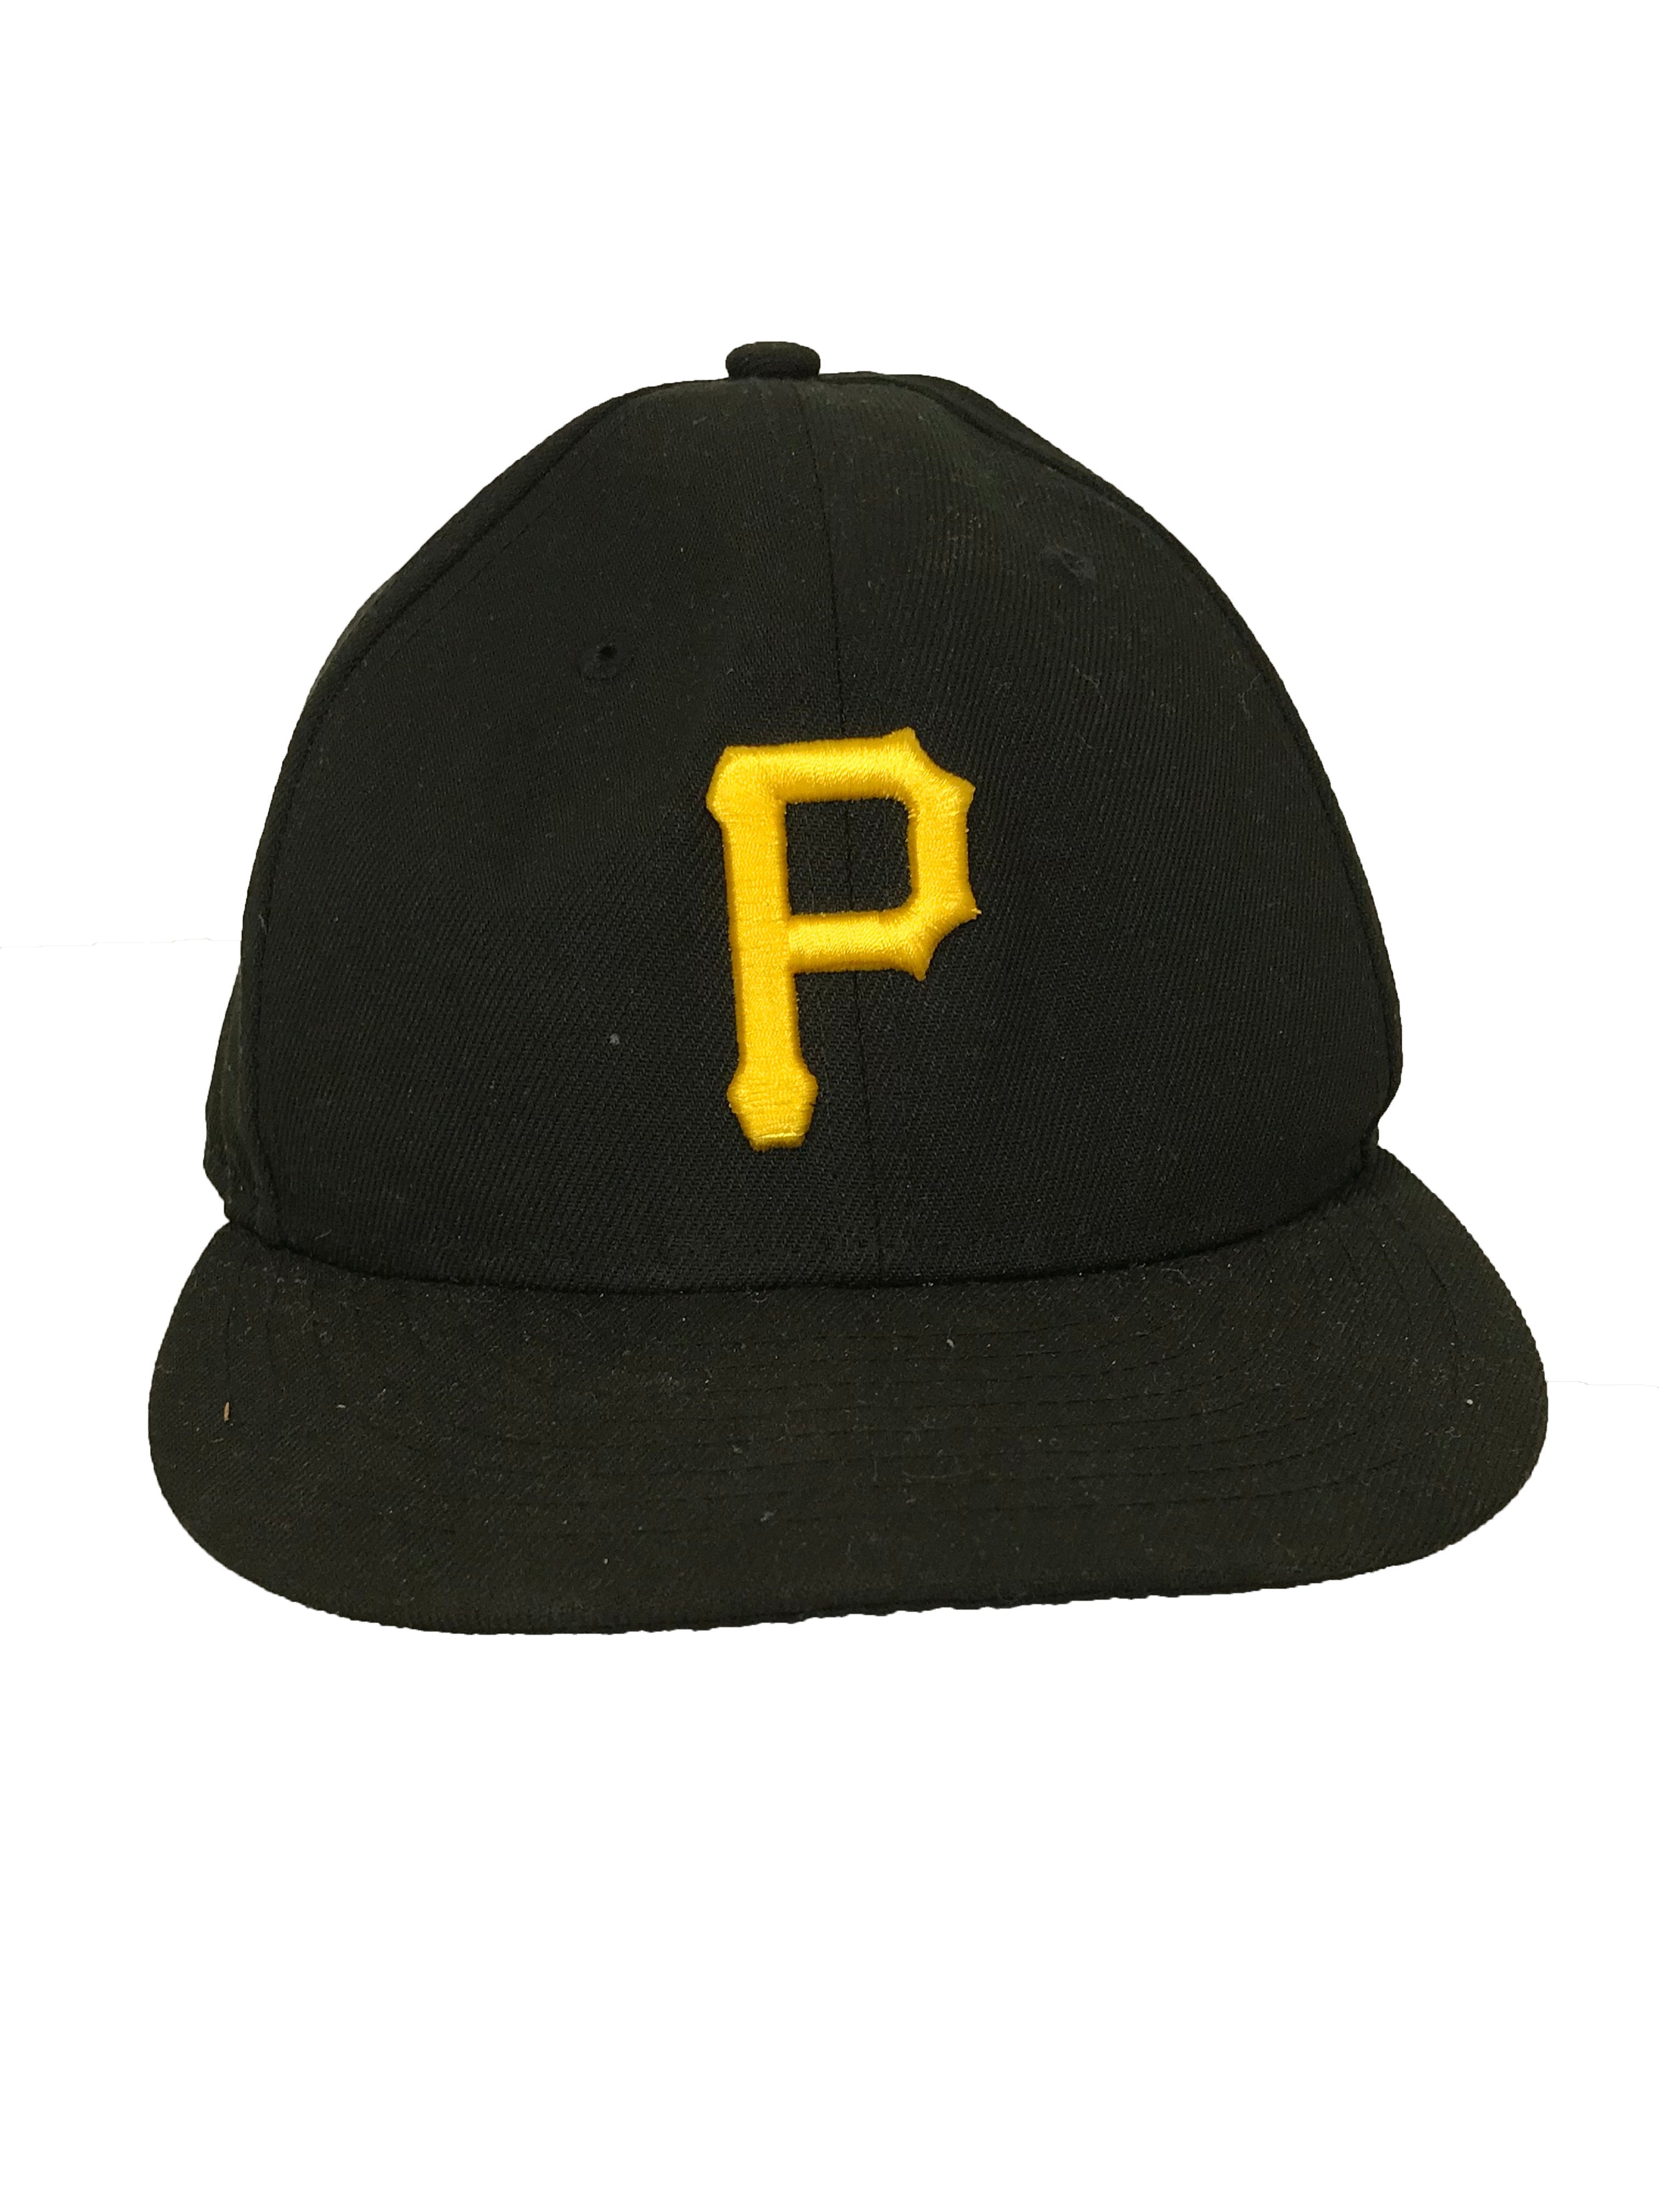 New Era Pittsburgh Pirates Black Fitted Baseball Hat Unisex Size 7 1/4 –  MSU Surplus Store